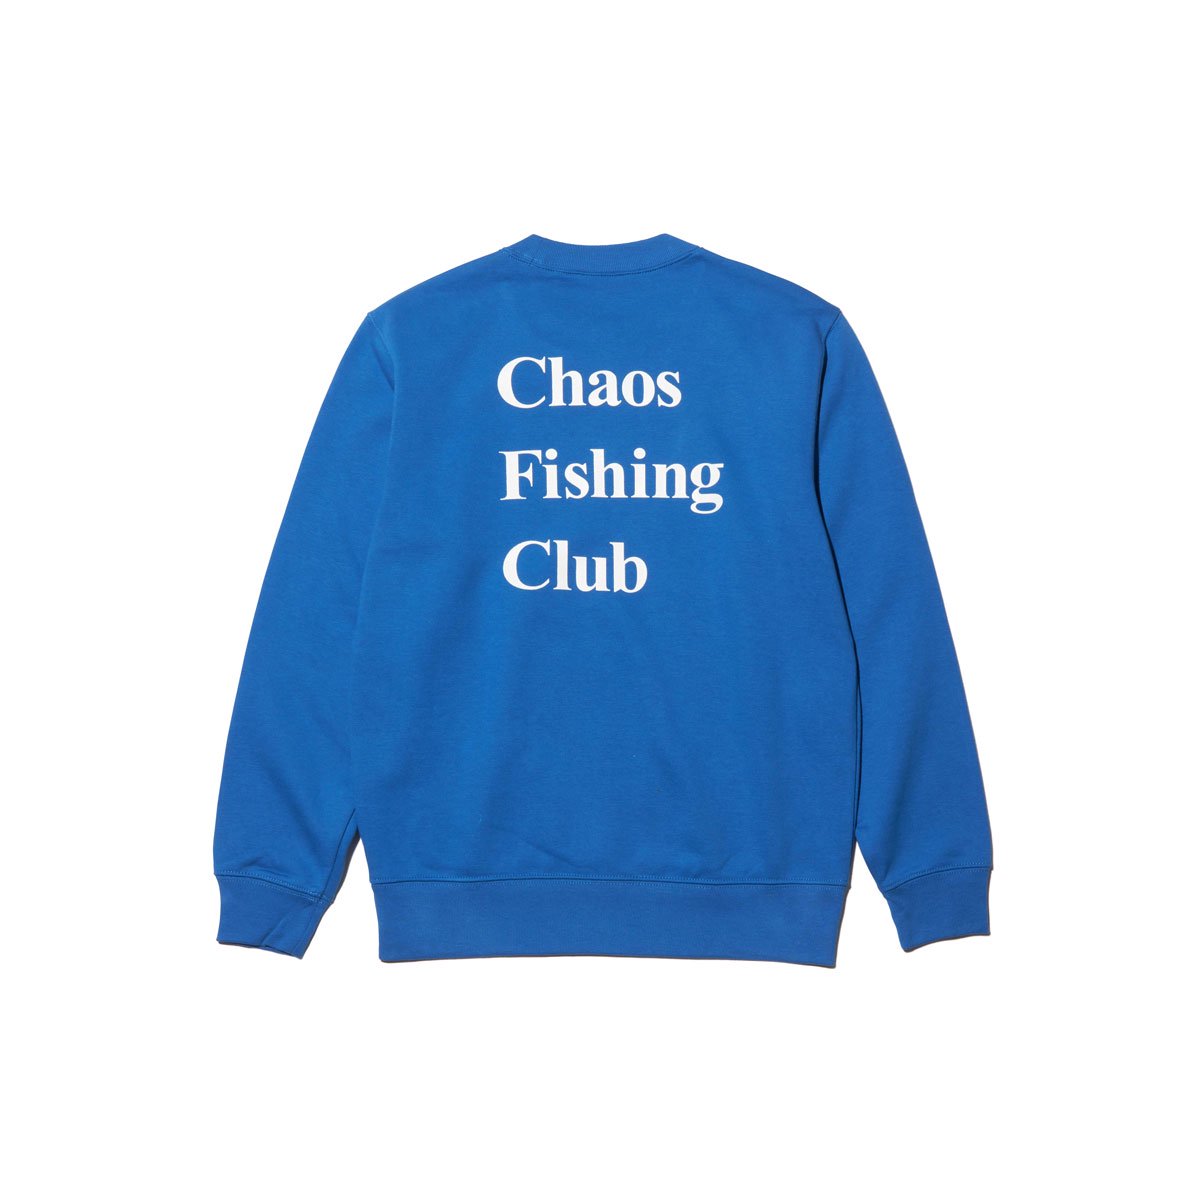 Chaos Fishing Club - KIDS LOGO CREW NECK L/S - SHRED